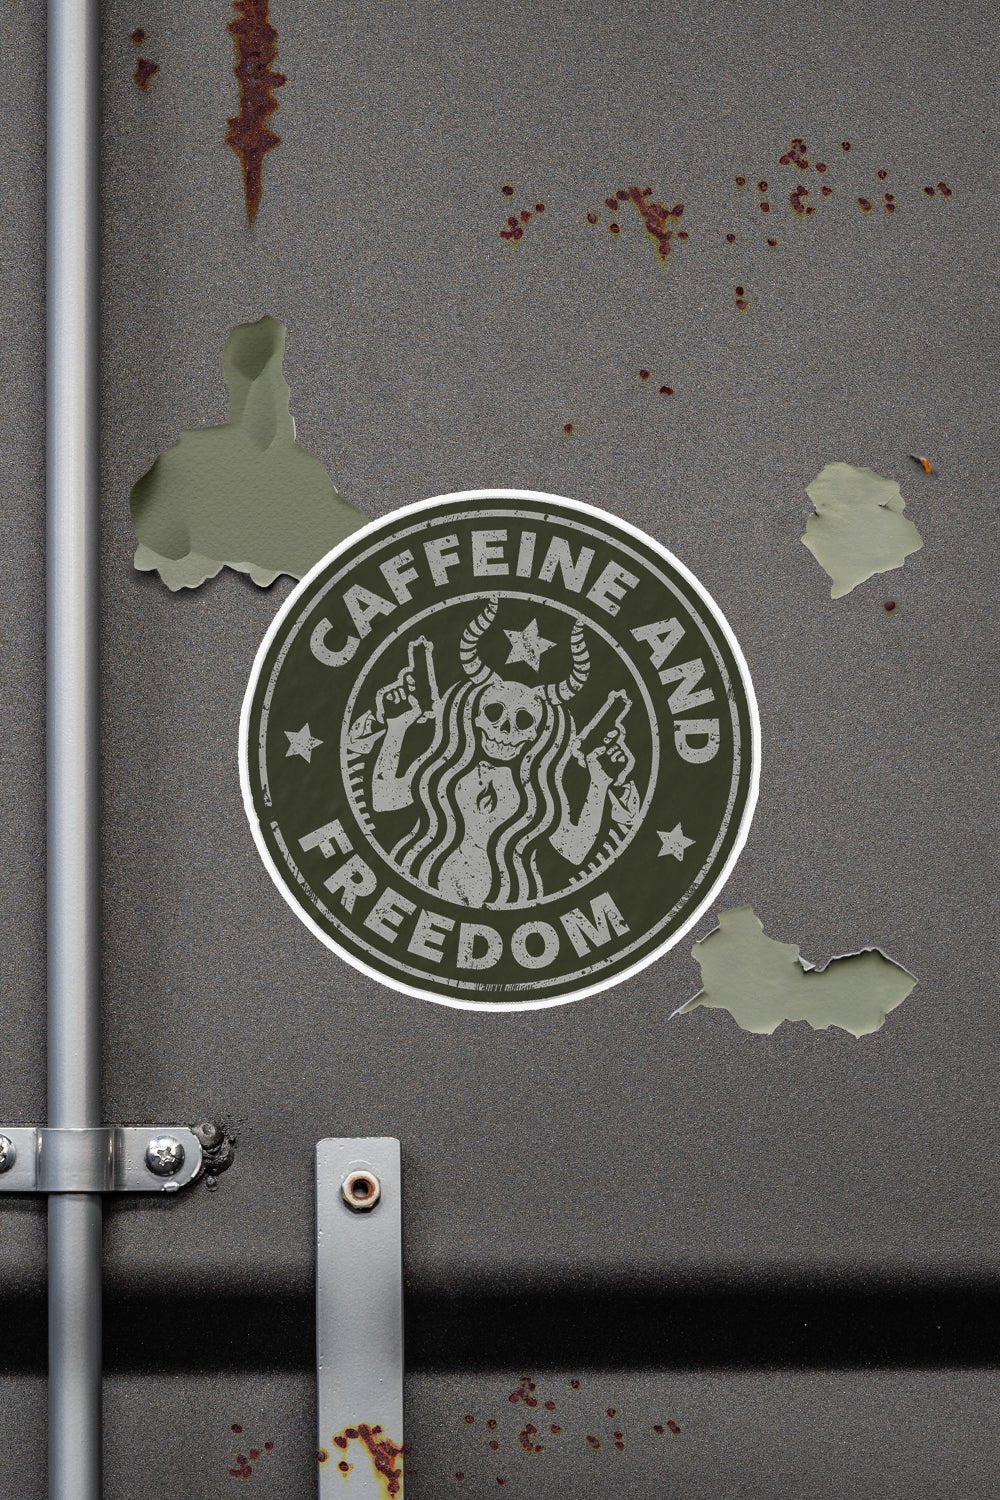 Sticker - Caffeine & Freedom